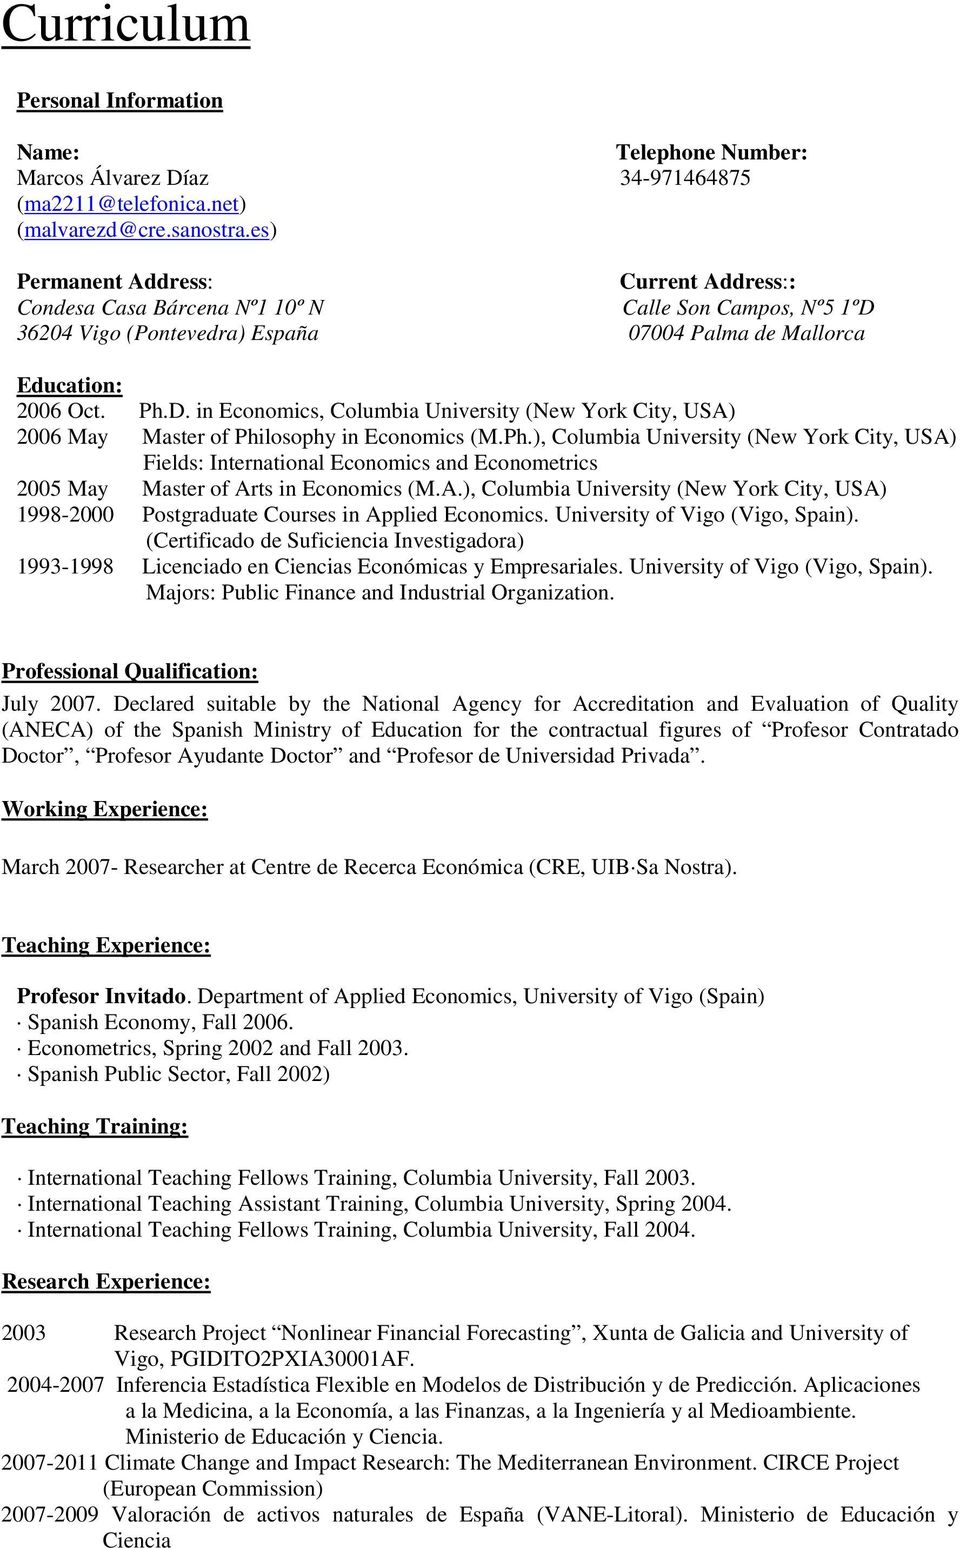 Ph.), Columbia University (New York City, USA) Fields: International Economics and Econometrics 2005 May Master of Arts in Economics (M.A.), Columbia University (New York City, USA) 1998-2000 Postgraduate Courses in Applied Economics.